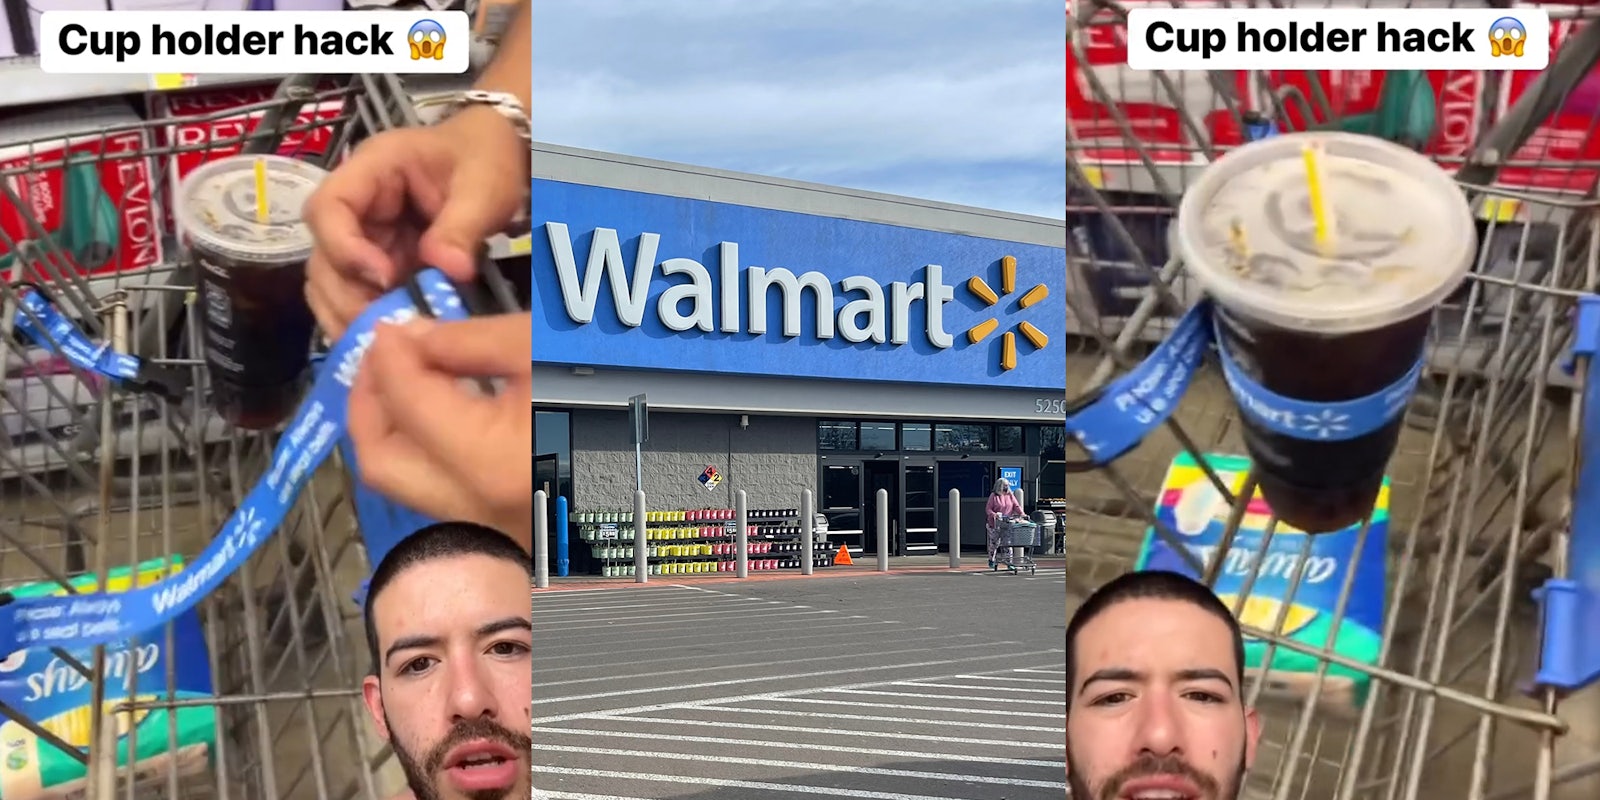 Shopper shares 'cup holder hack' for Walmart shopping carts